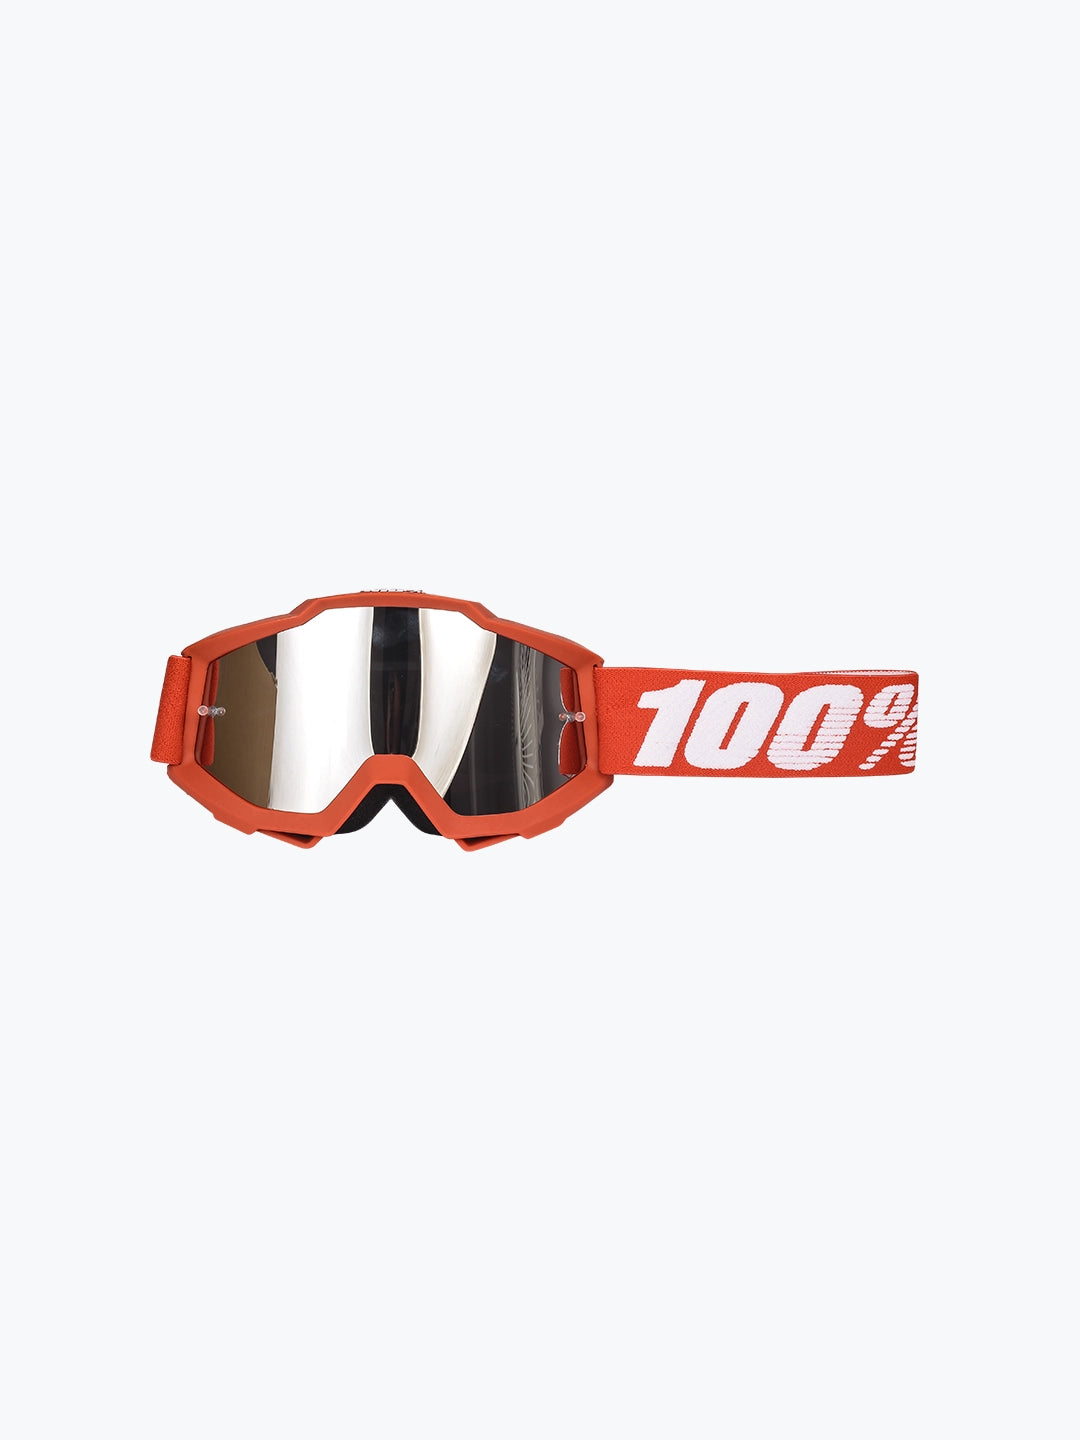 Goggles 100% -136 Chrome Tint